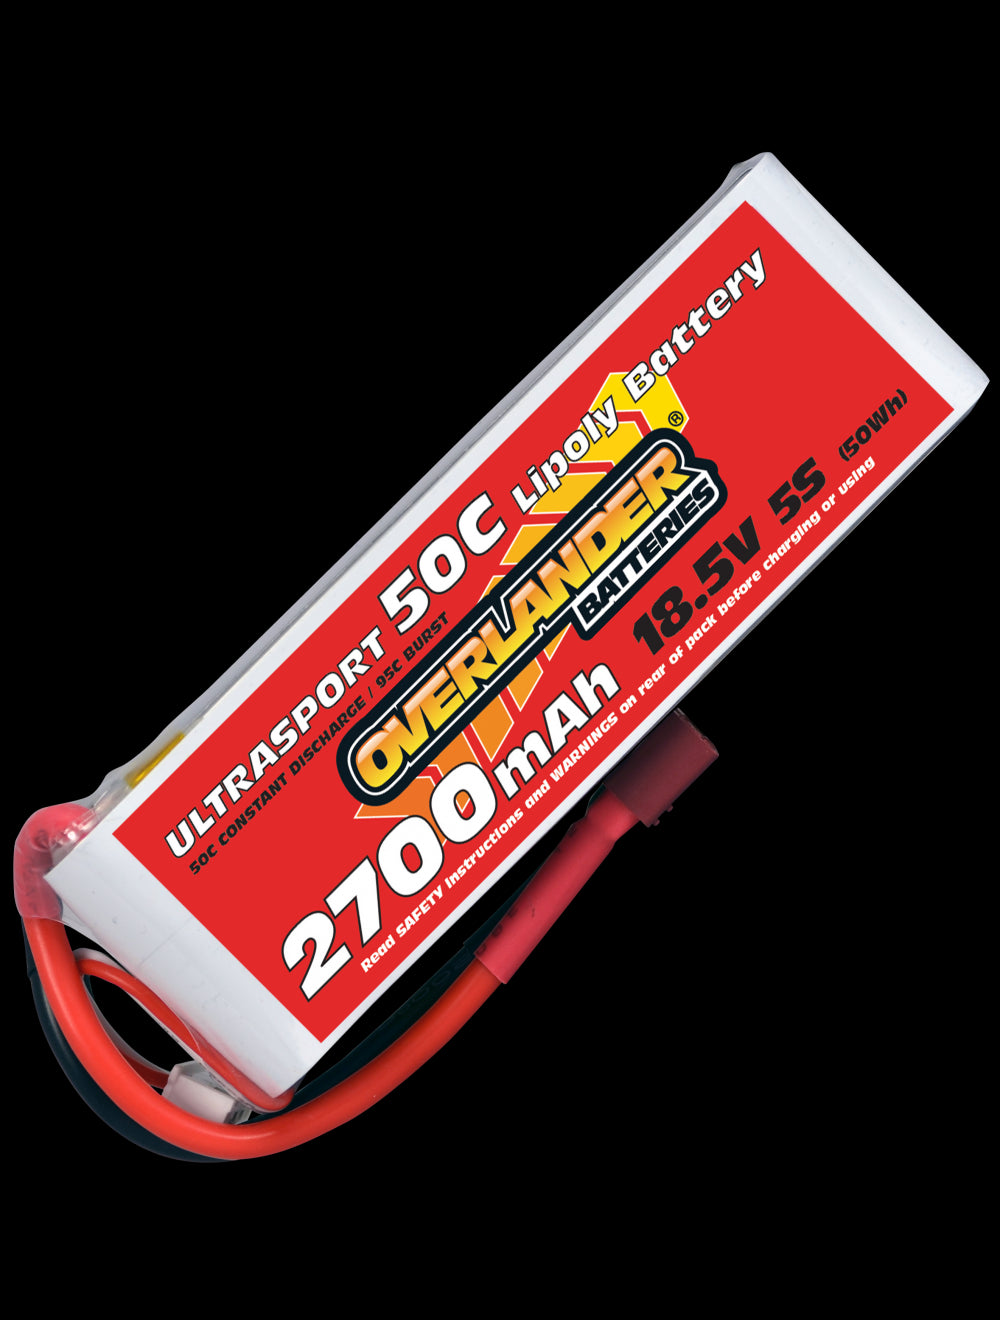 Overlander 2700mAh 18.5V 5S 50C Ultrasport LiPo Battery - Deans Connector 3224